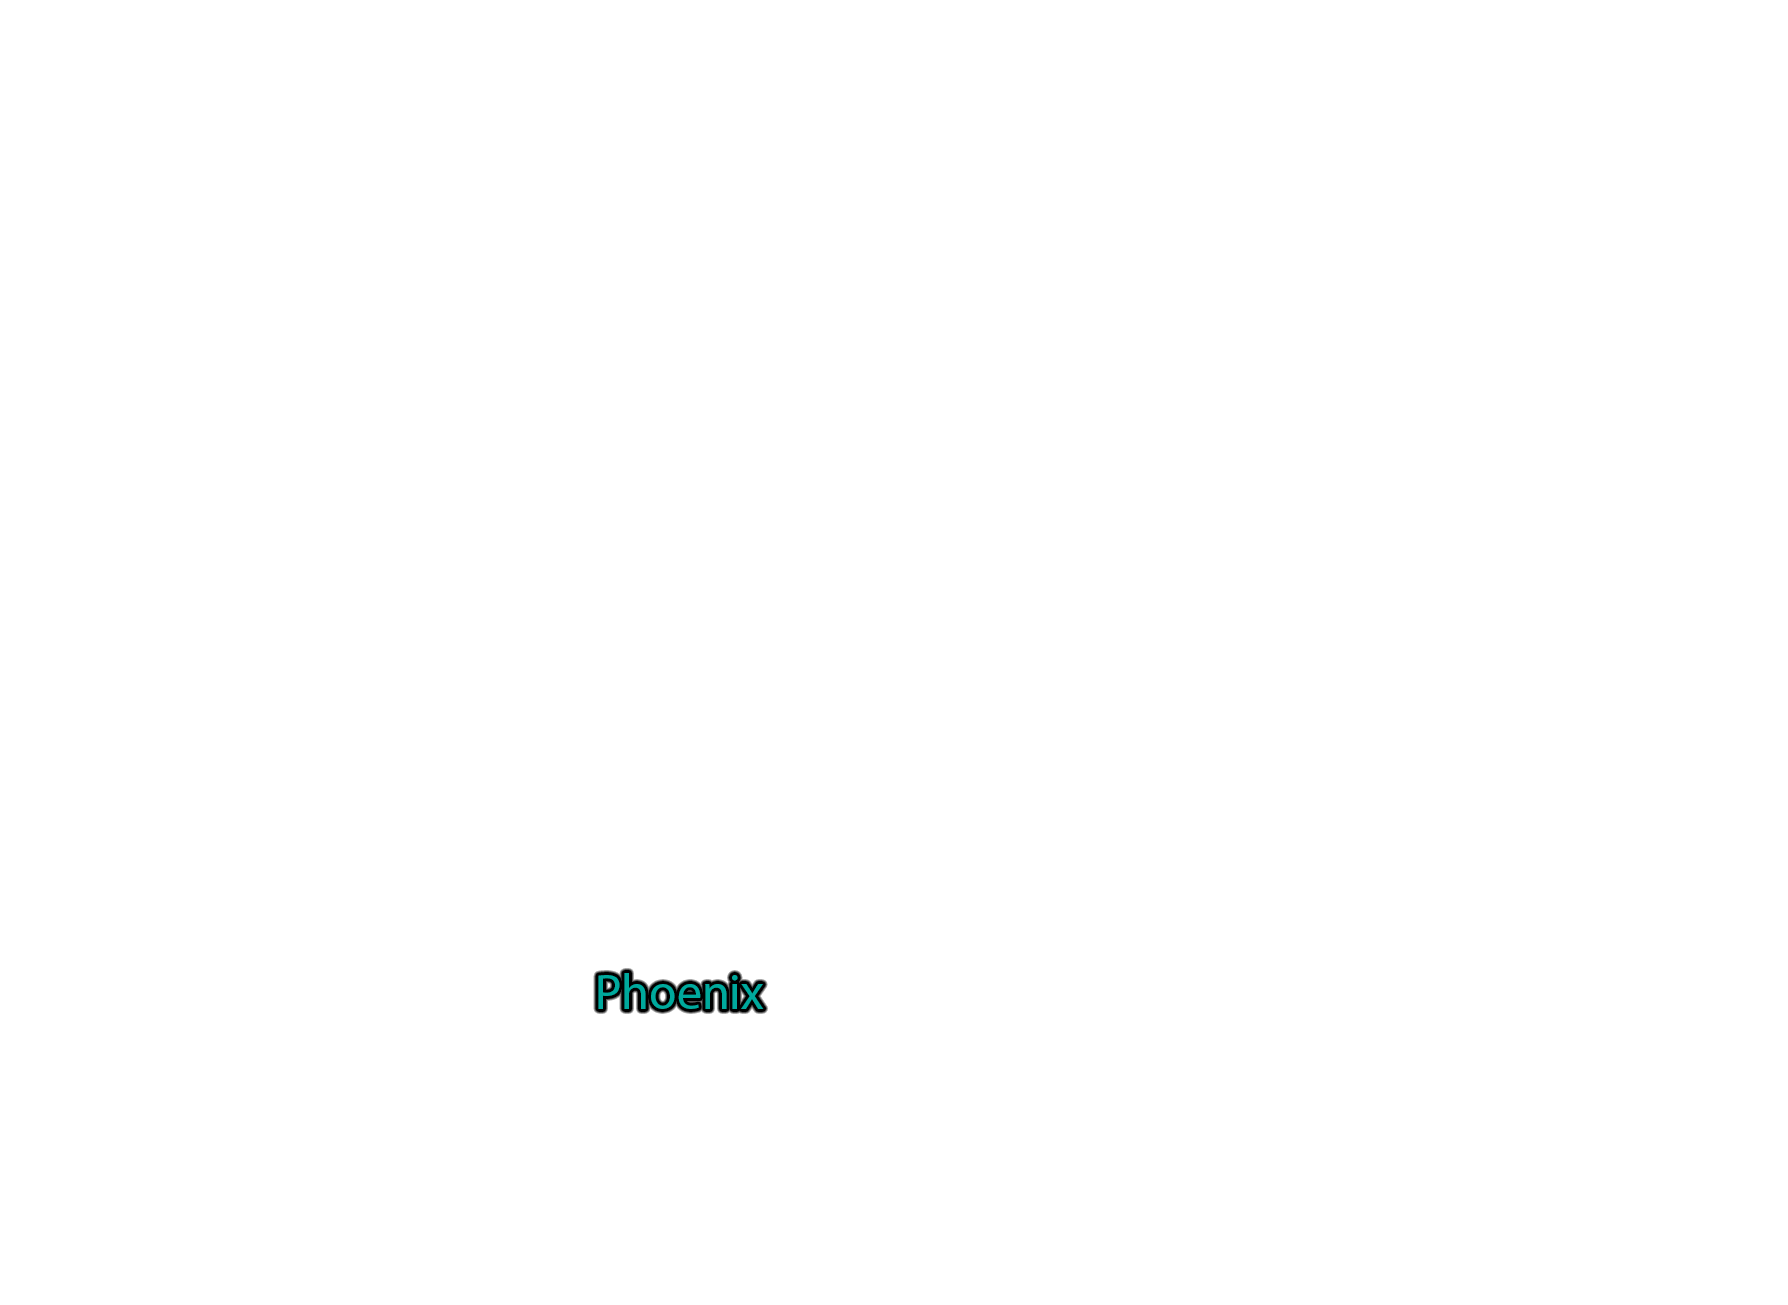 Phoenix label with glow